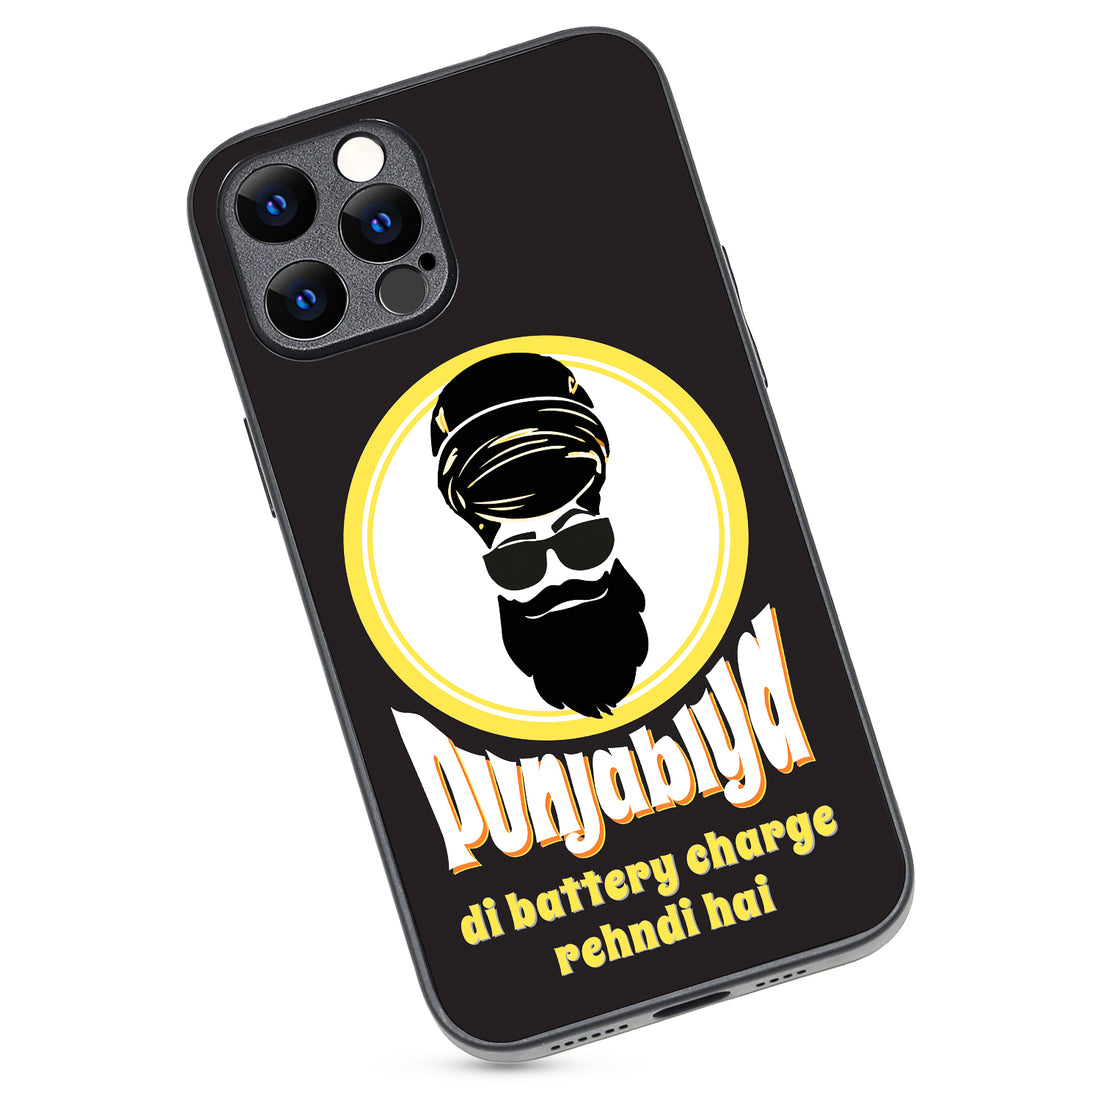 Punjabiyan Di Battery Masculine iPhone 12 Pro Max Case